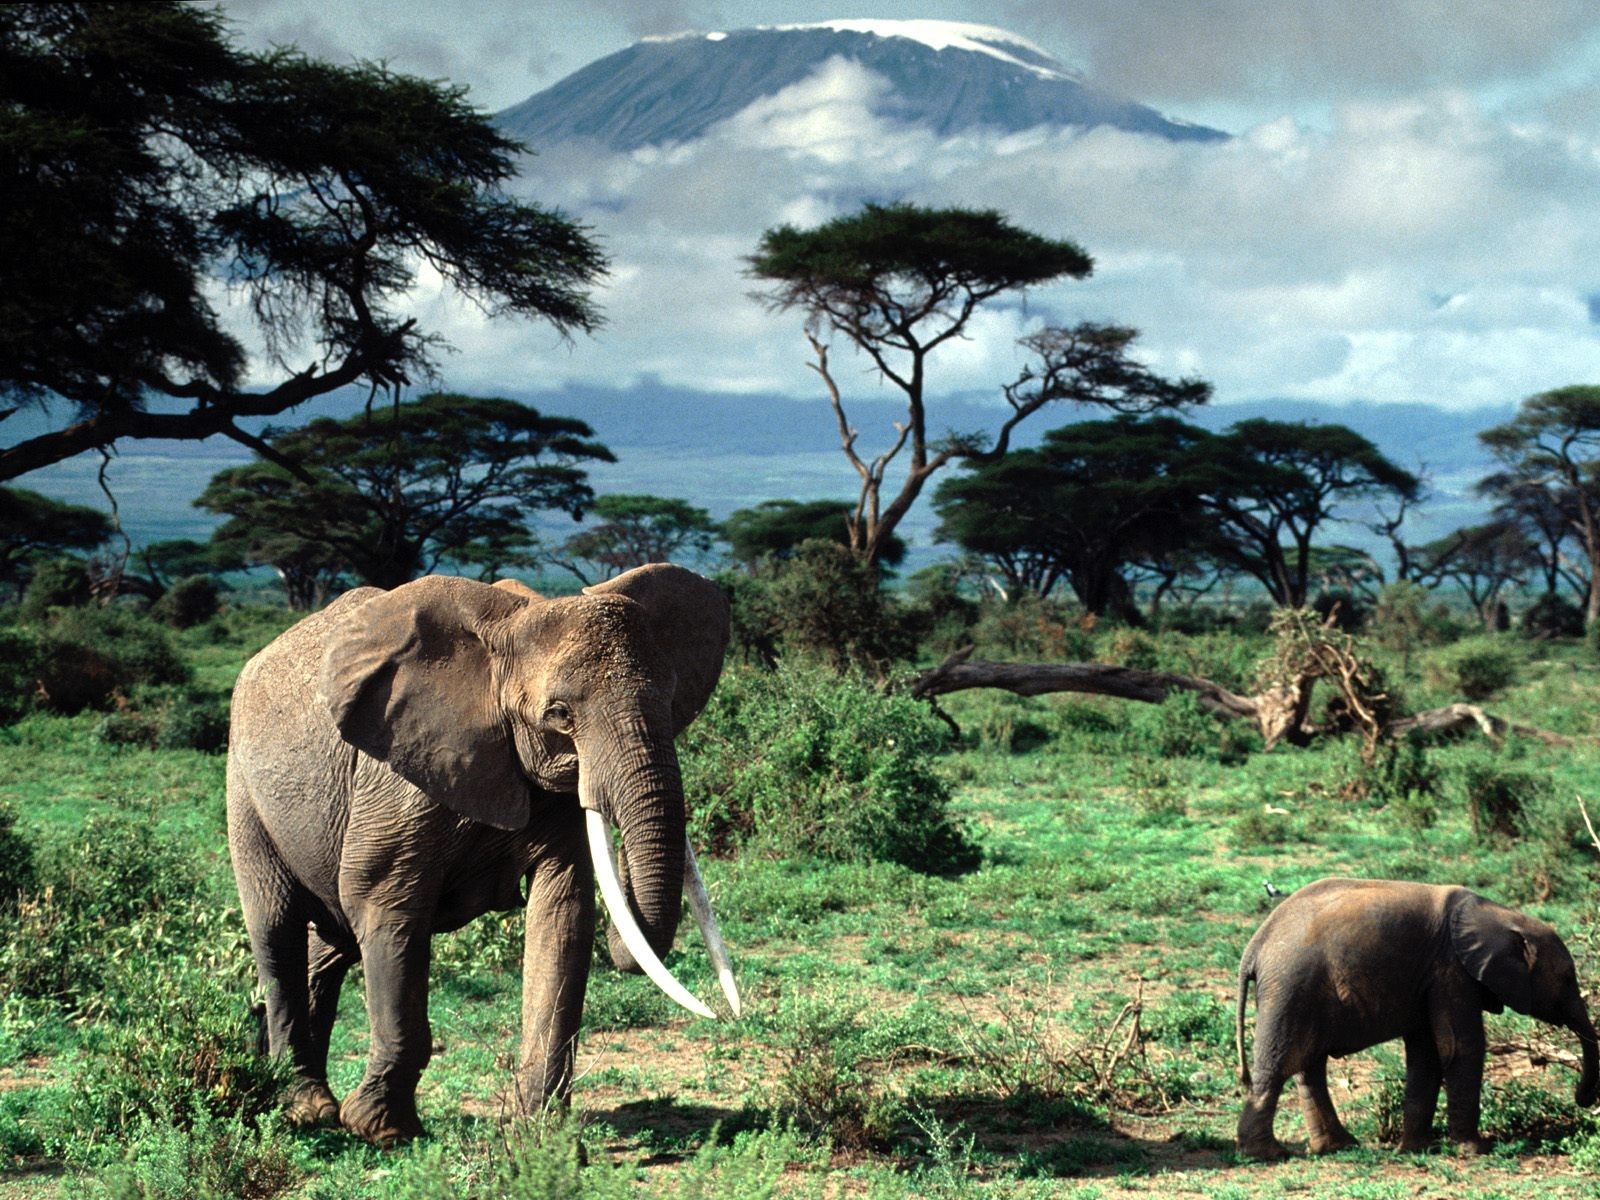 General 1600x1200 elephant Africa animals savannah Mount Kilimanjaro landscape mammals nature